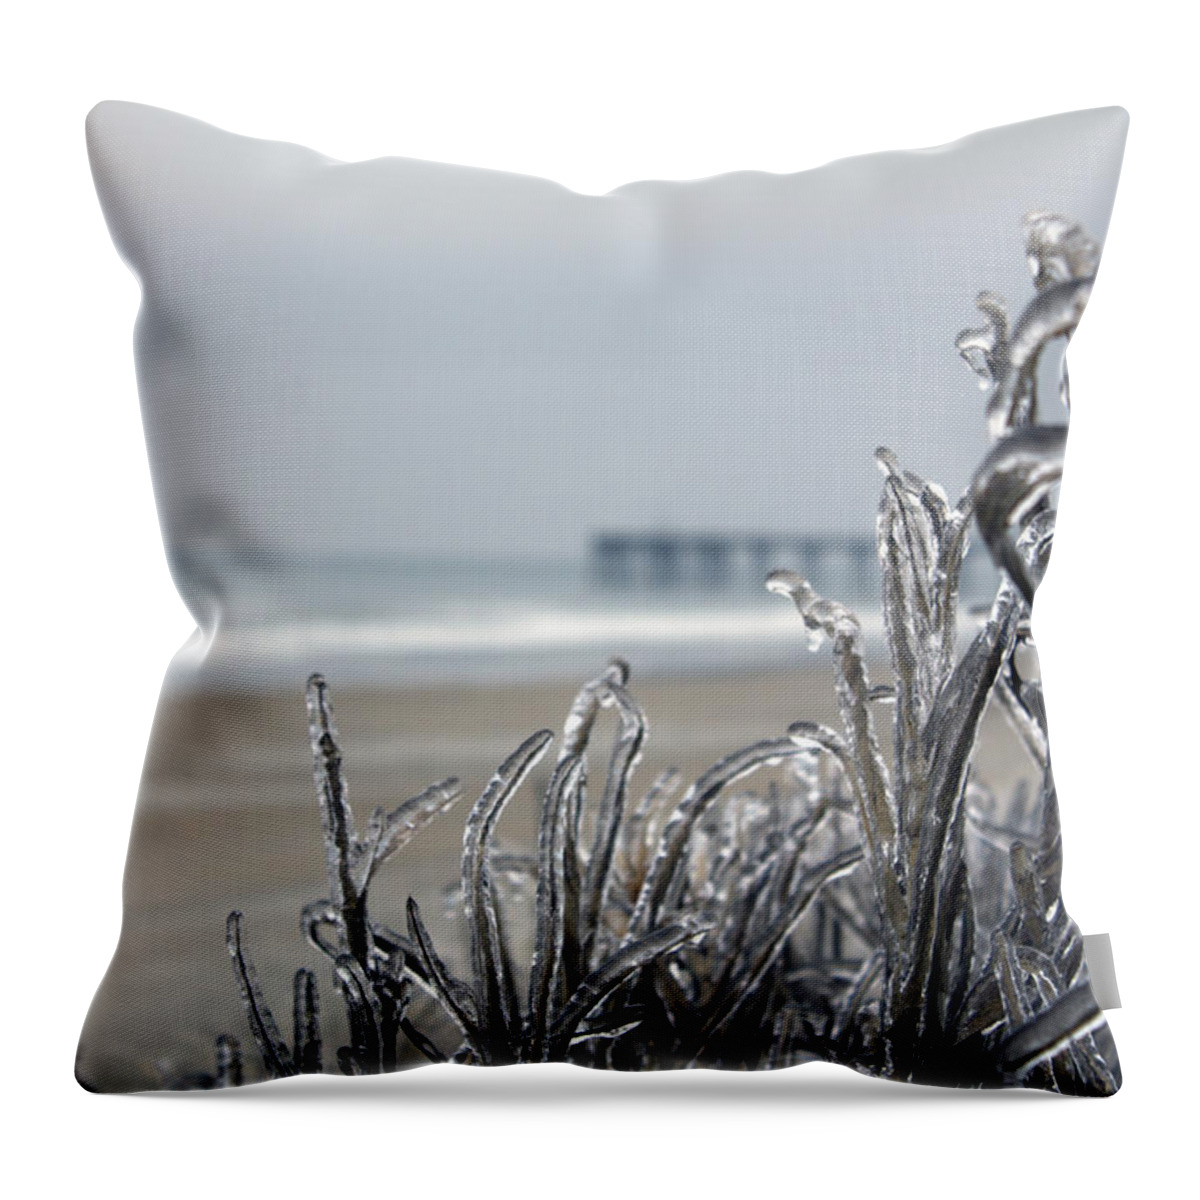 Frozen Beach Throw Pillow featuring the photograph Beach Glass by William Love